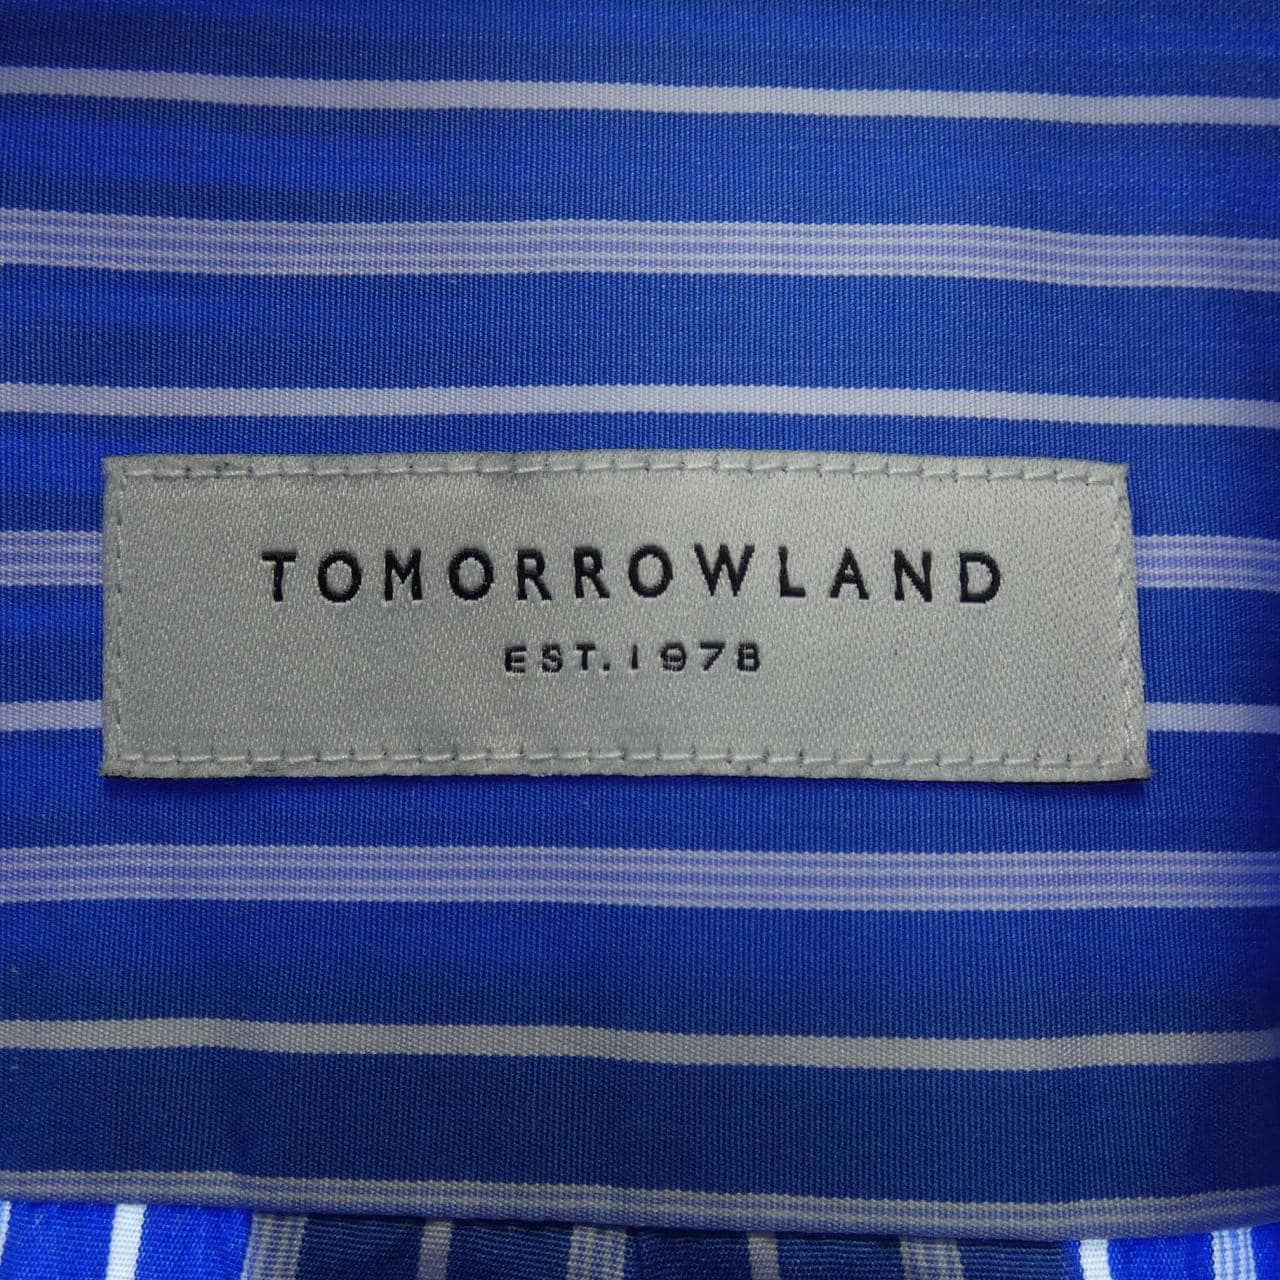 Tomorrowland TOMORROW LAND shirt